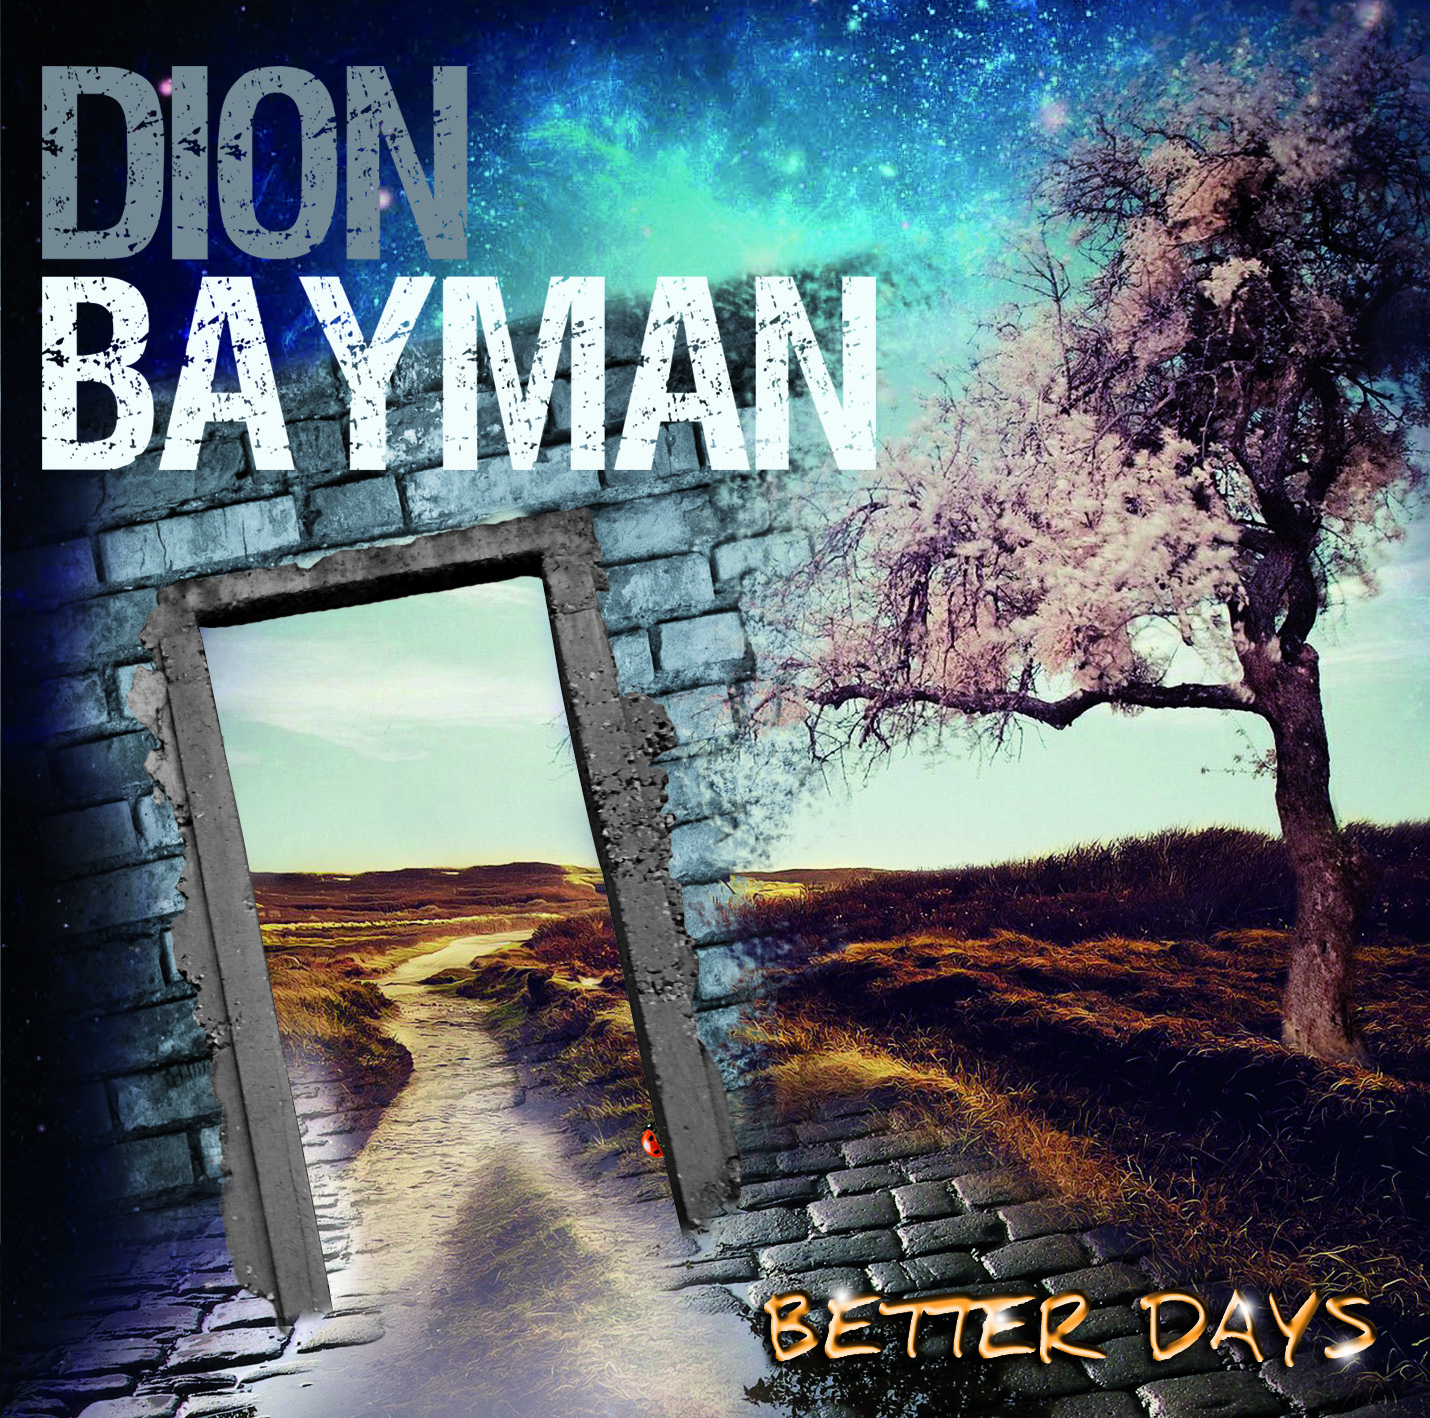 Dion Bayman (AUS) – Better Days